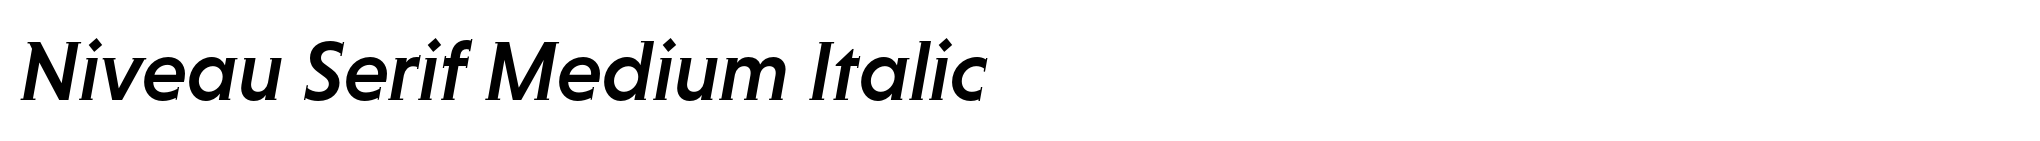 Niveau Serif Medium Italic image